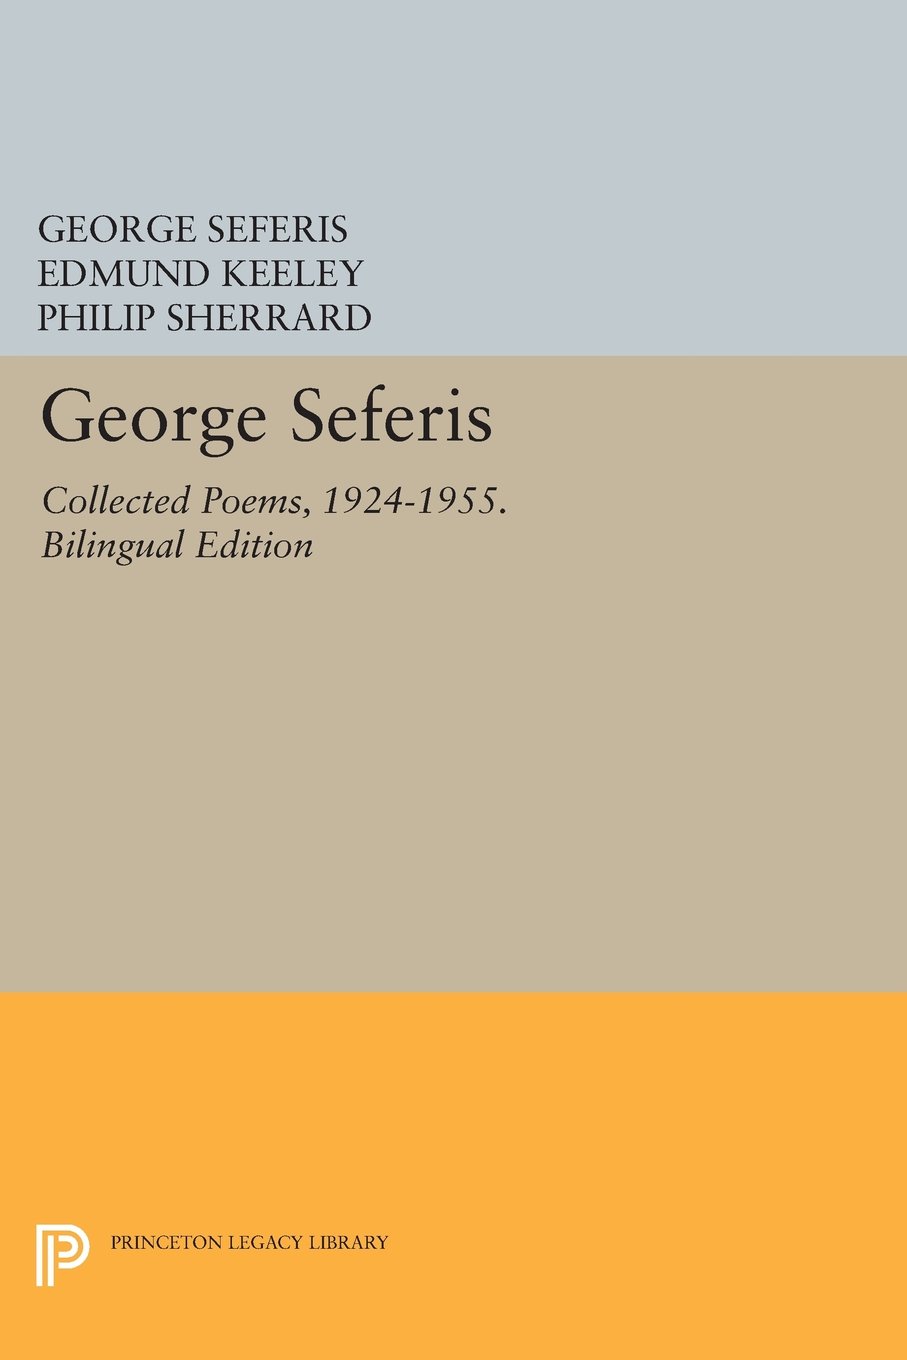 Read ebook : Seferis, George - Collected Poems, 1924-1955 (Princeton, 1981).pdf